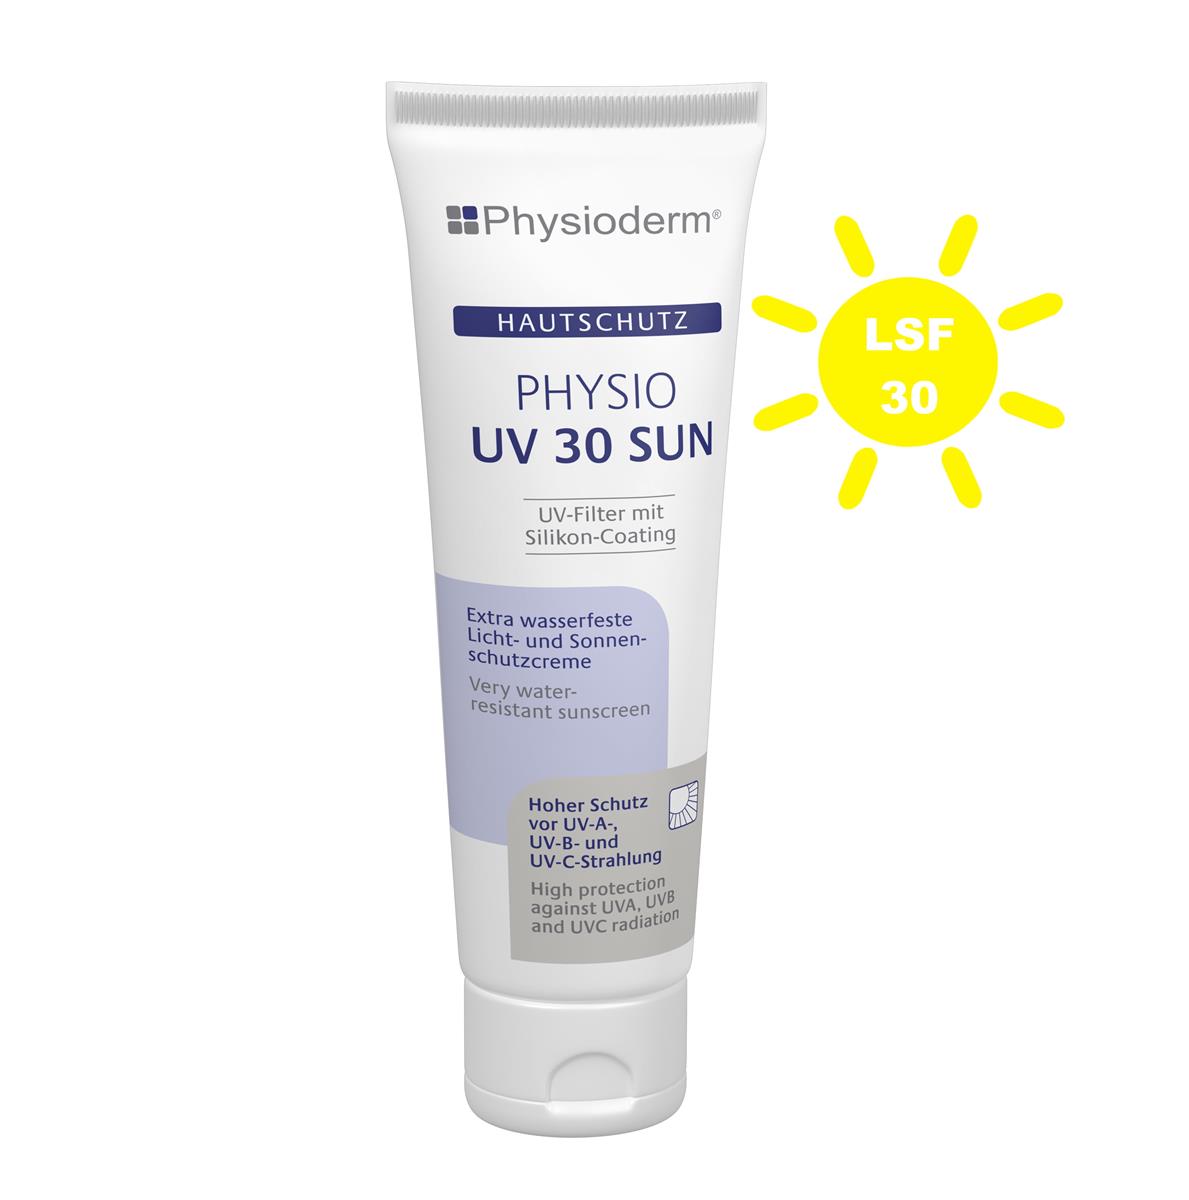 Peter Greven Physioderm® Physio UV 30 sun 100ml Standtube